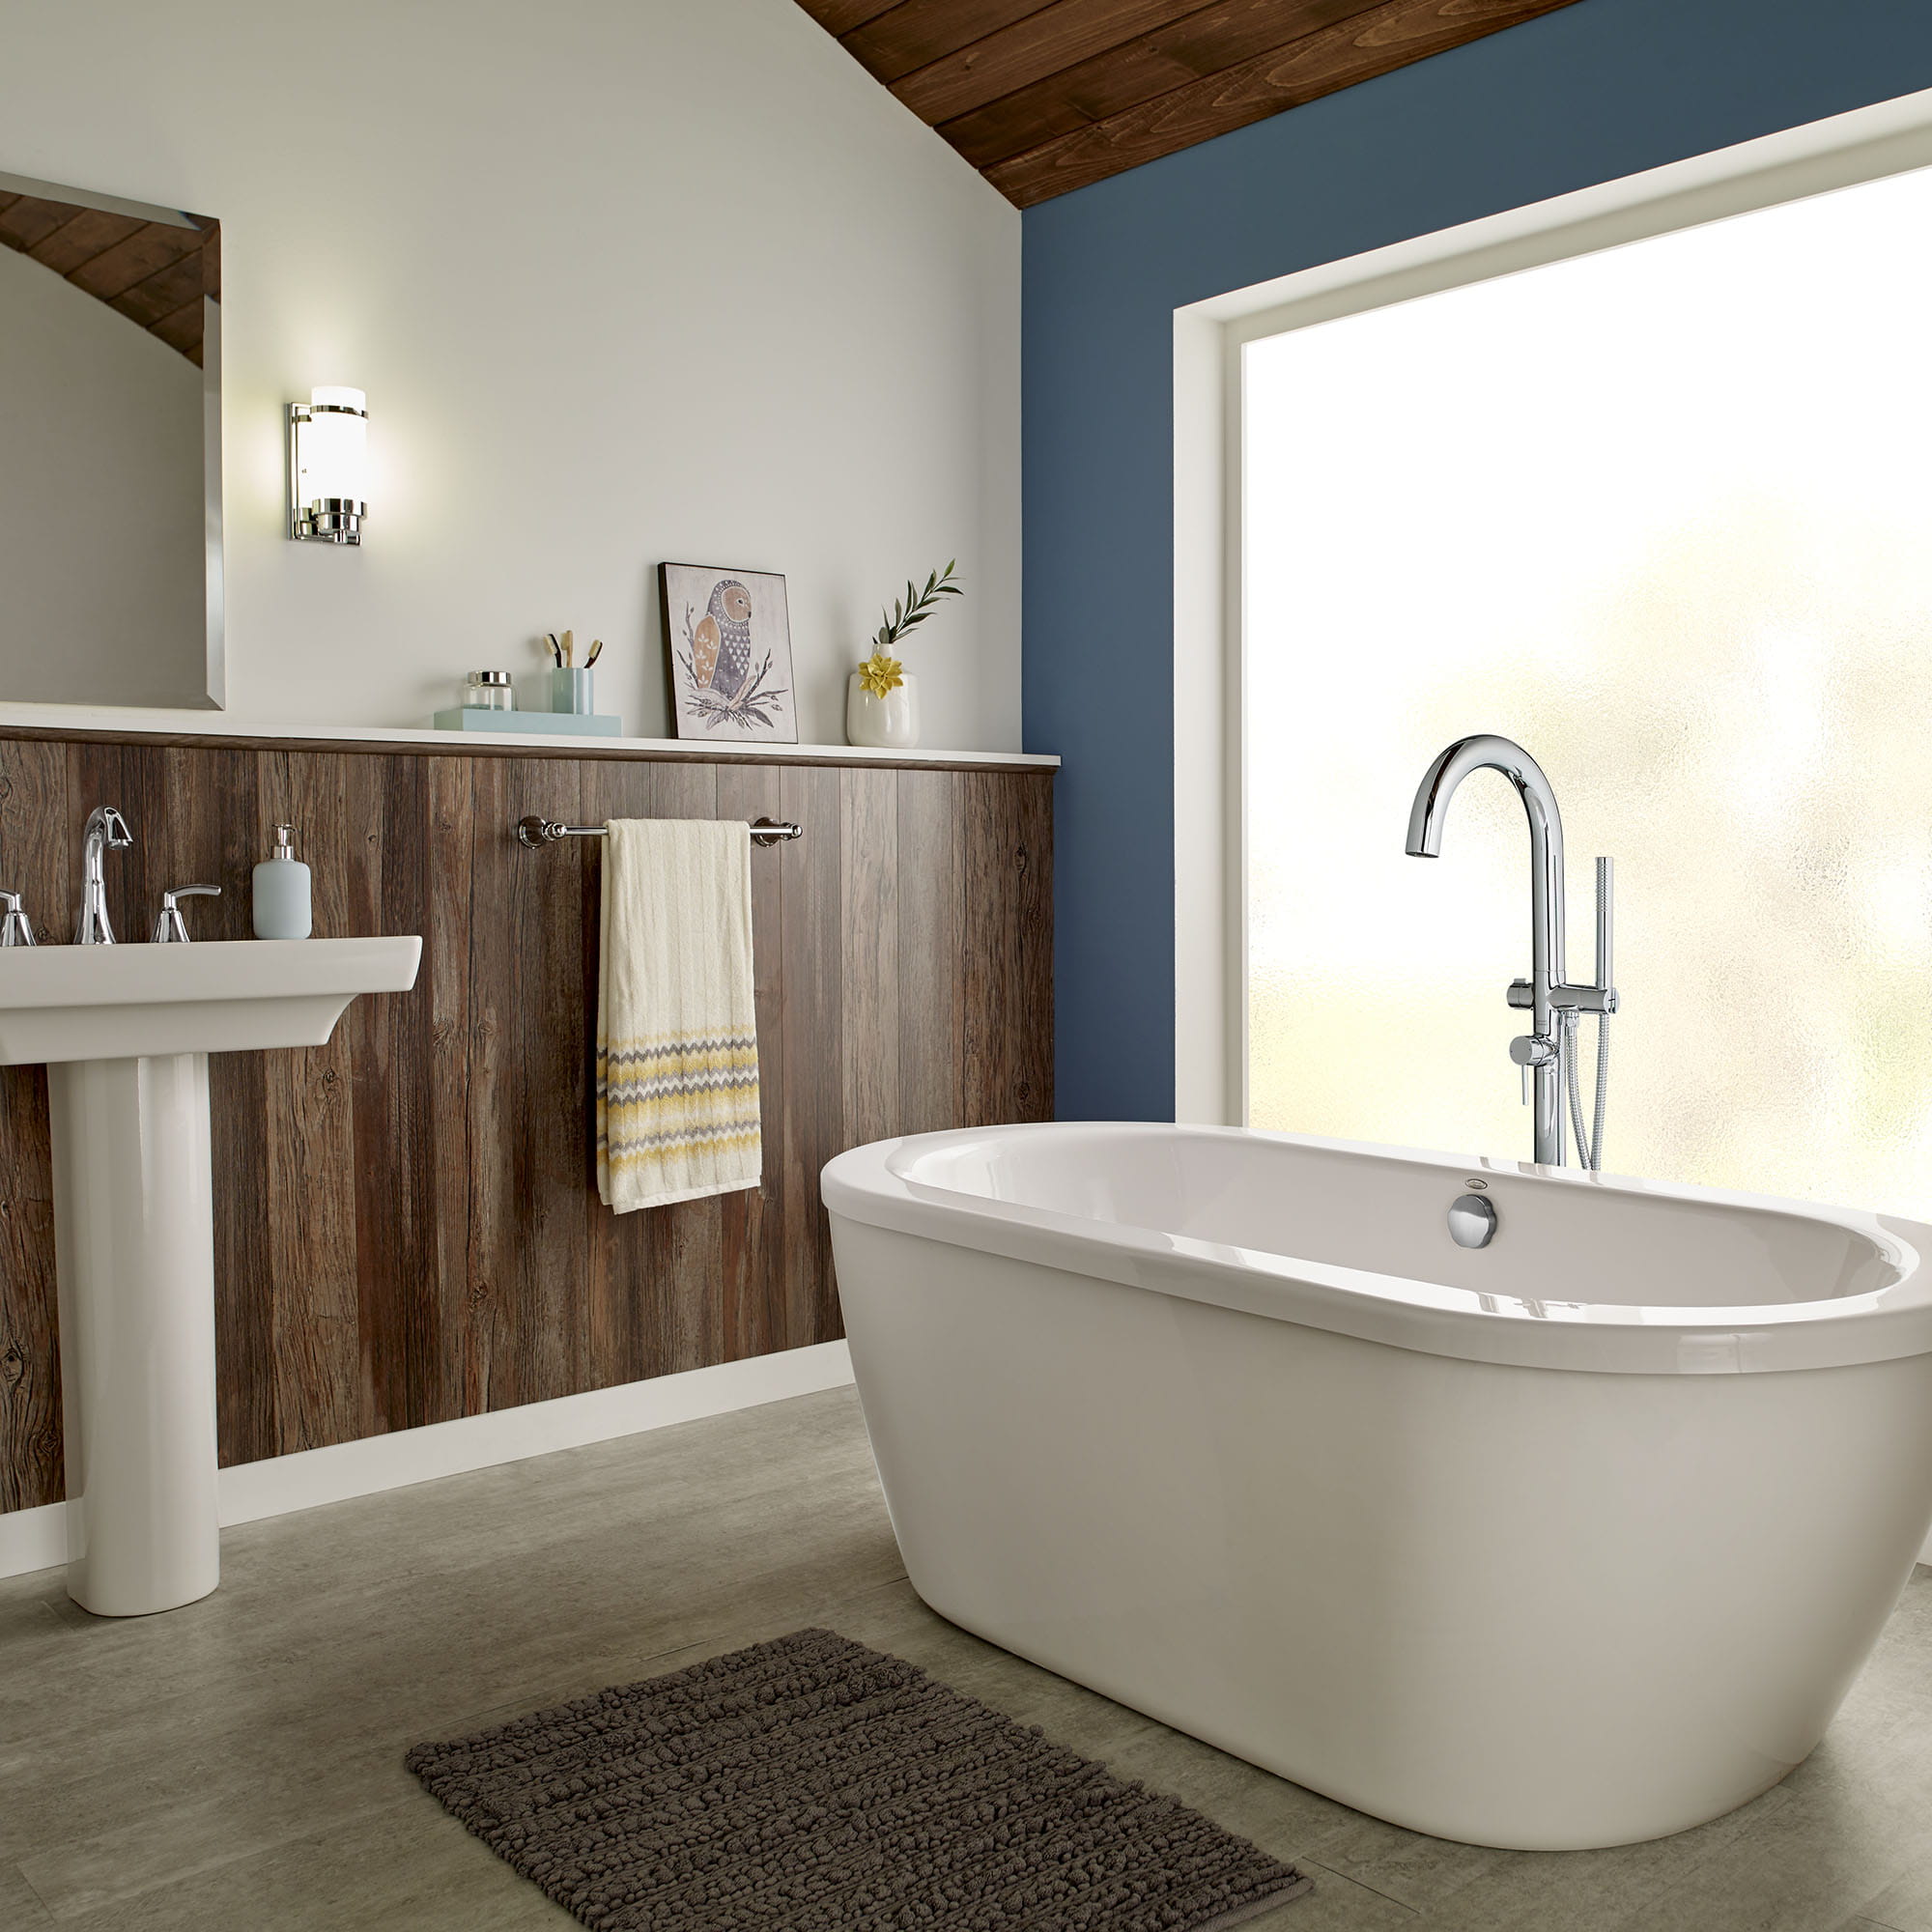 Cadet® 66 x 32-Inch Freestanding Bathtub With Drain Chrome Finish